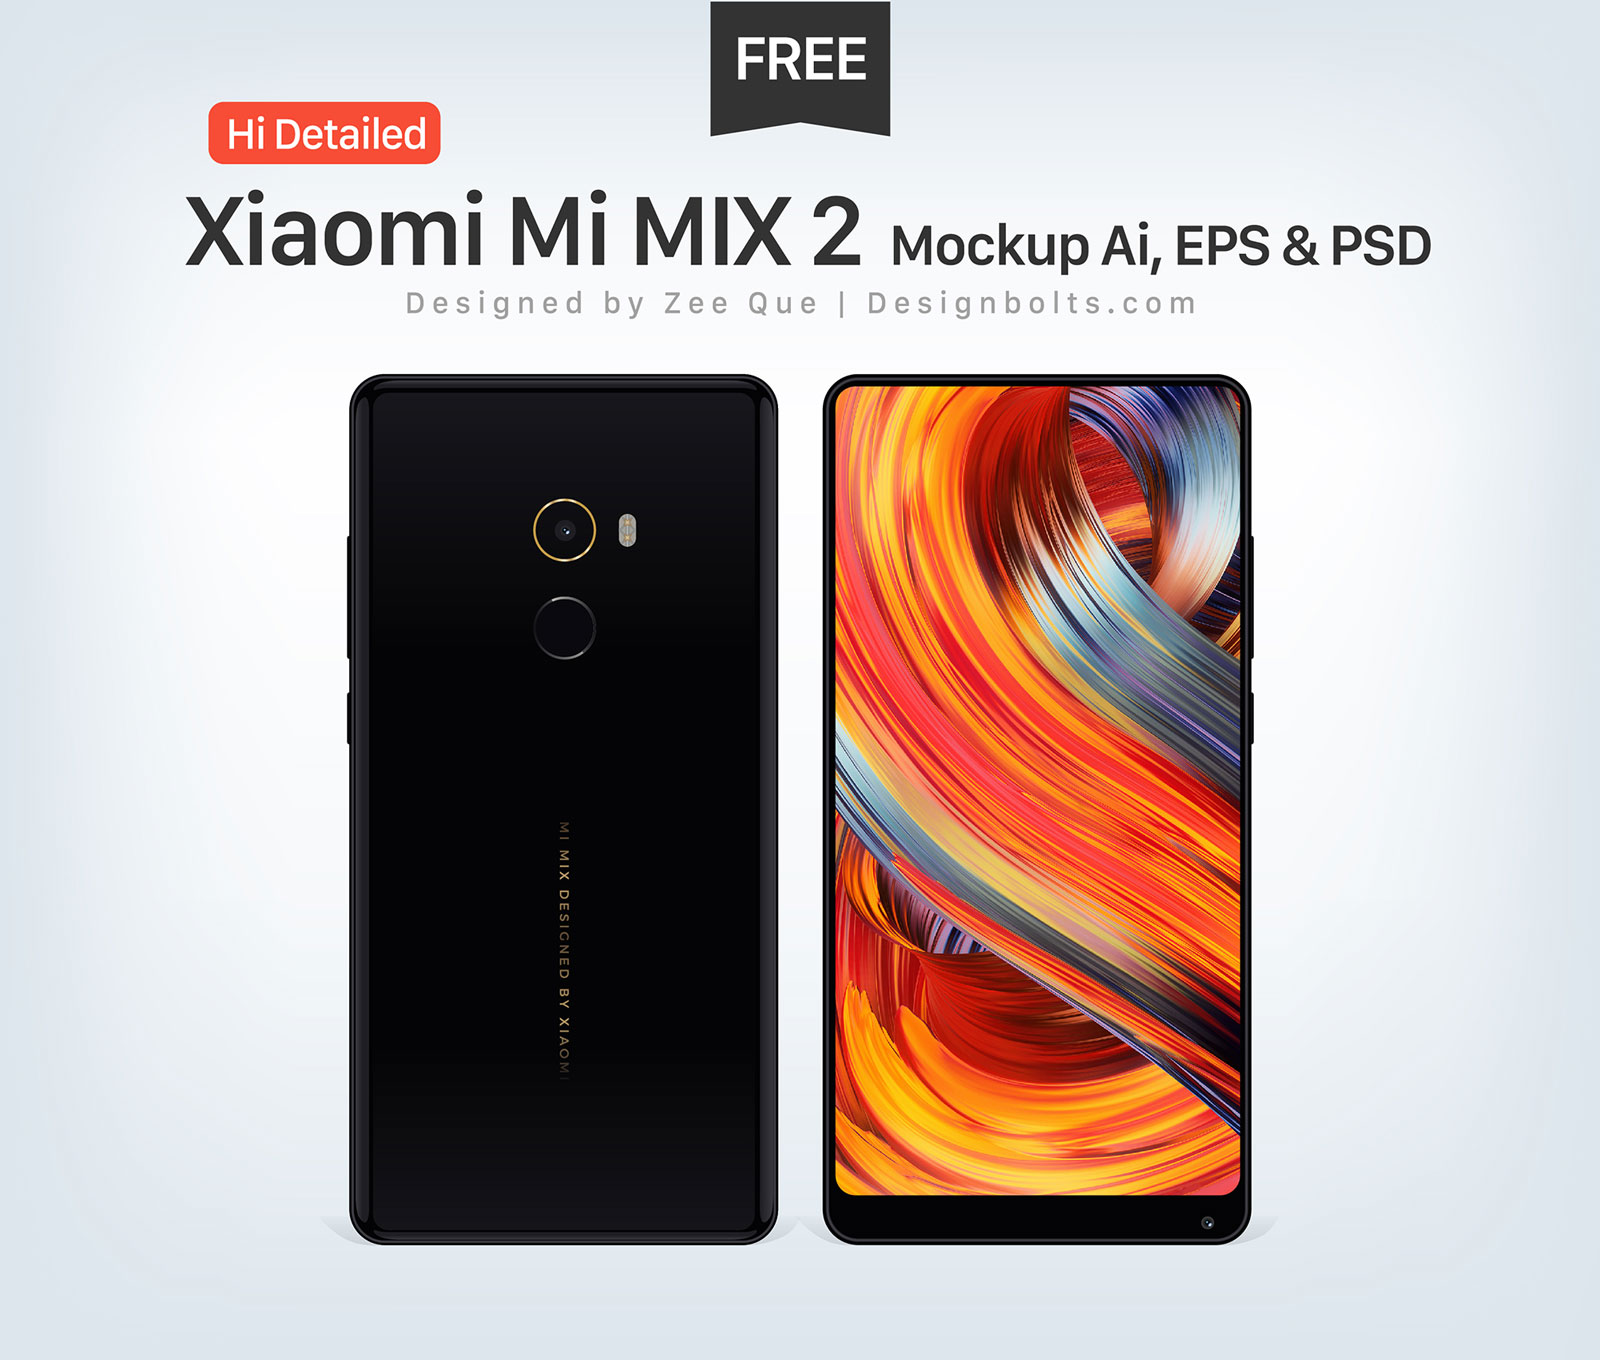 Xiaomi Mi Mix 2 Mockup AI, EPS & PSD